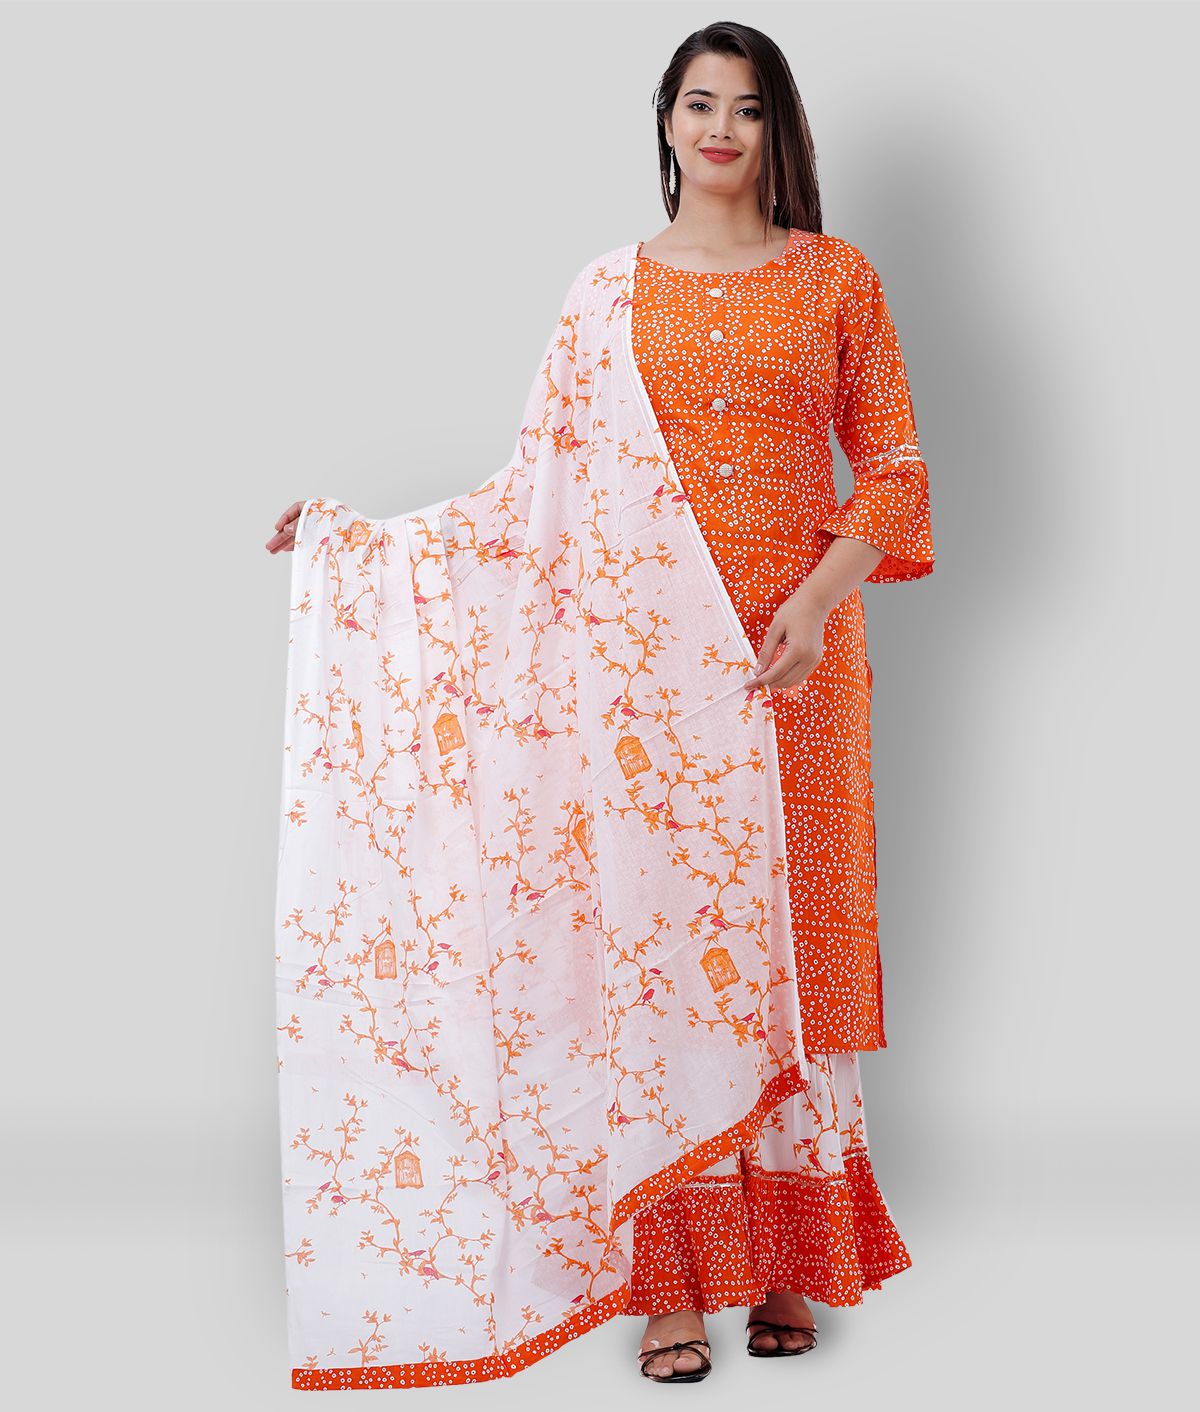 Lee Moda - Fluorescent Orange Straight Rayon Women's Stitched Salwar Suit ( Pack of 1 )